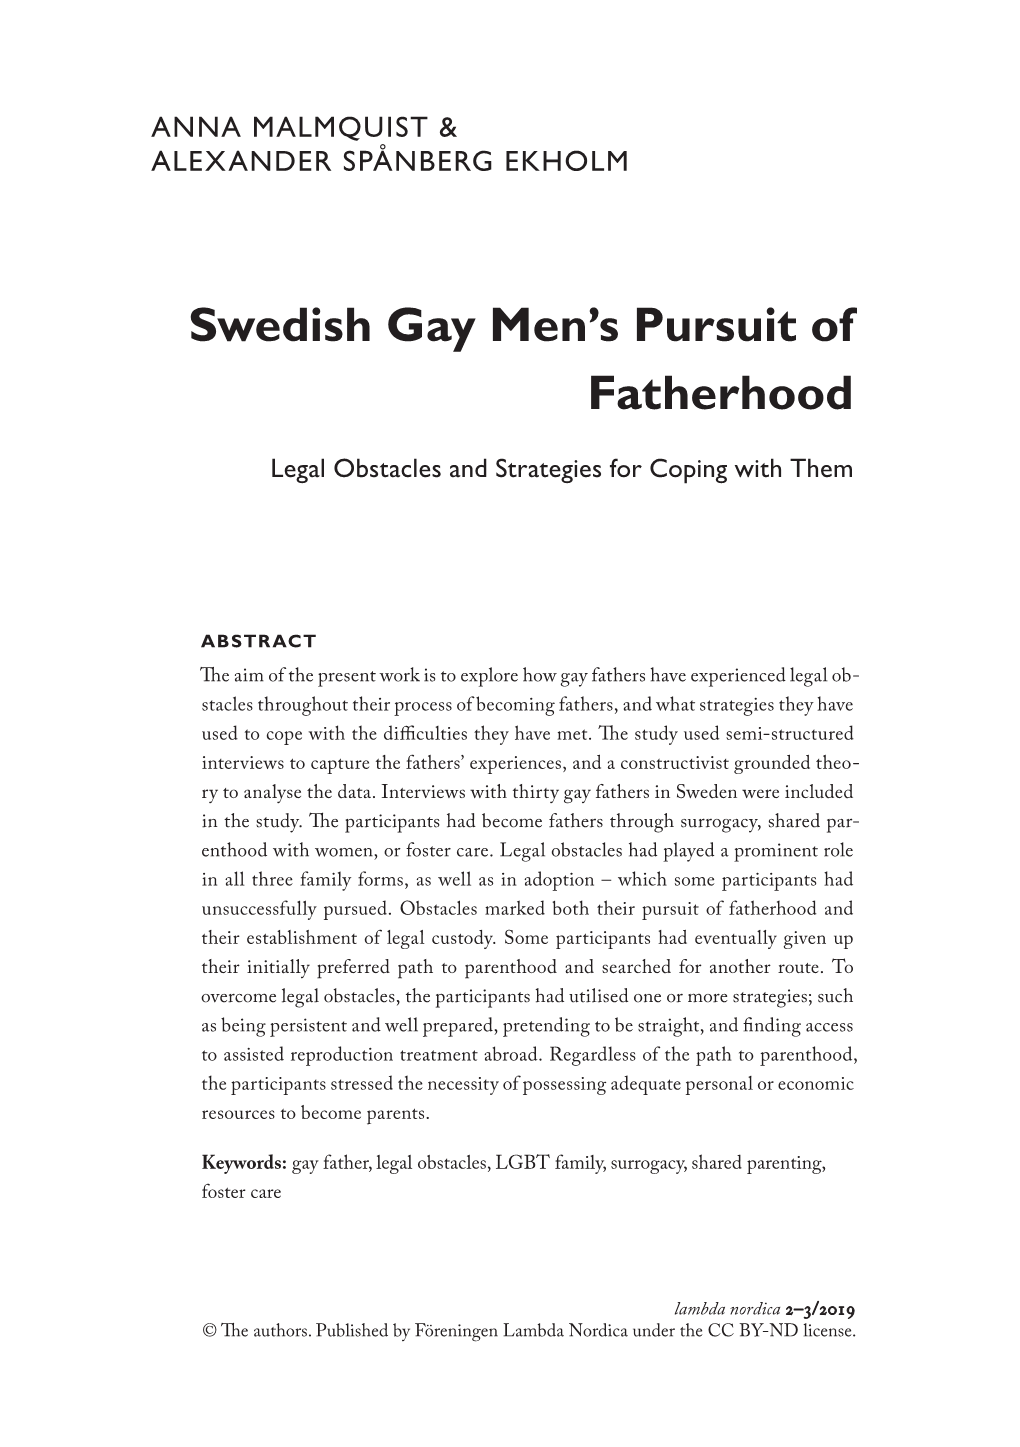 Swedish Gay Men's Pursuit of Fatherhood